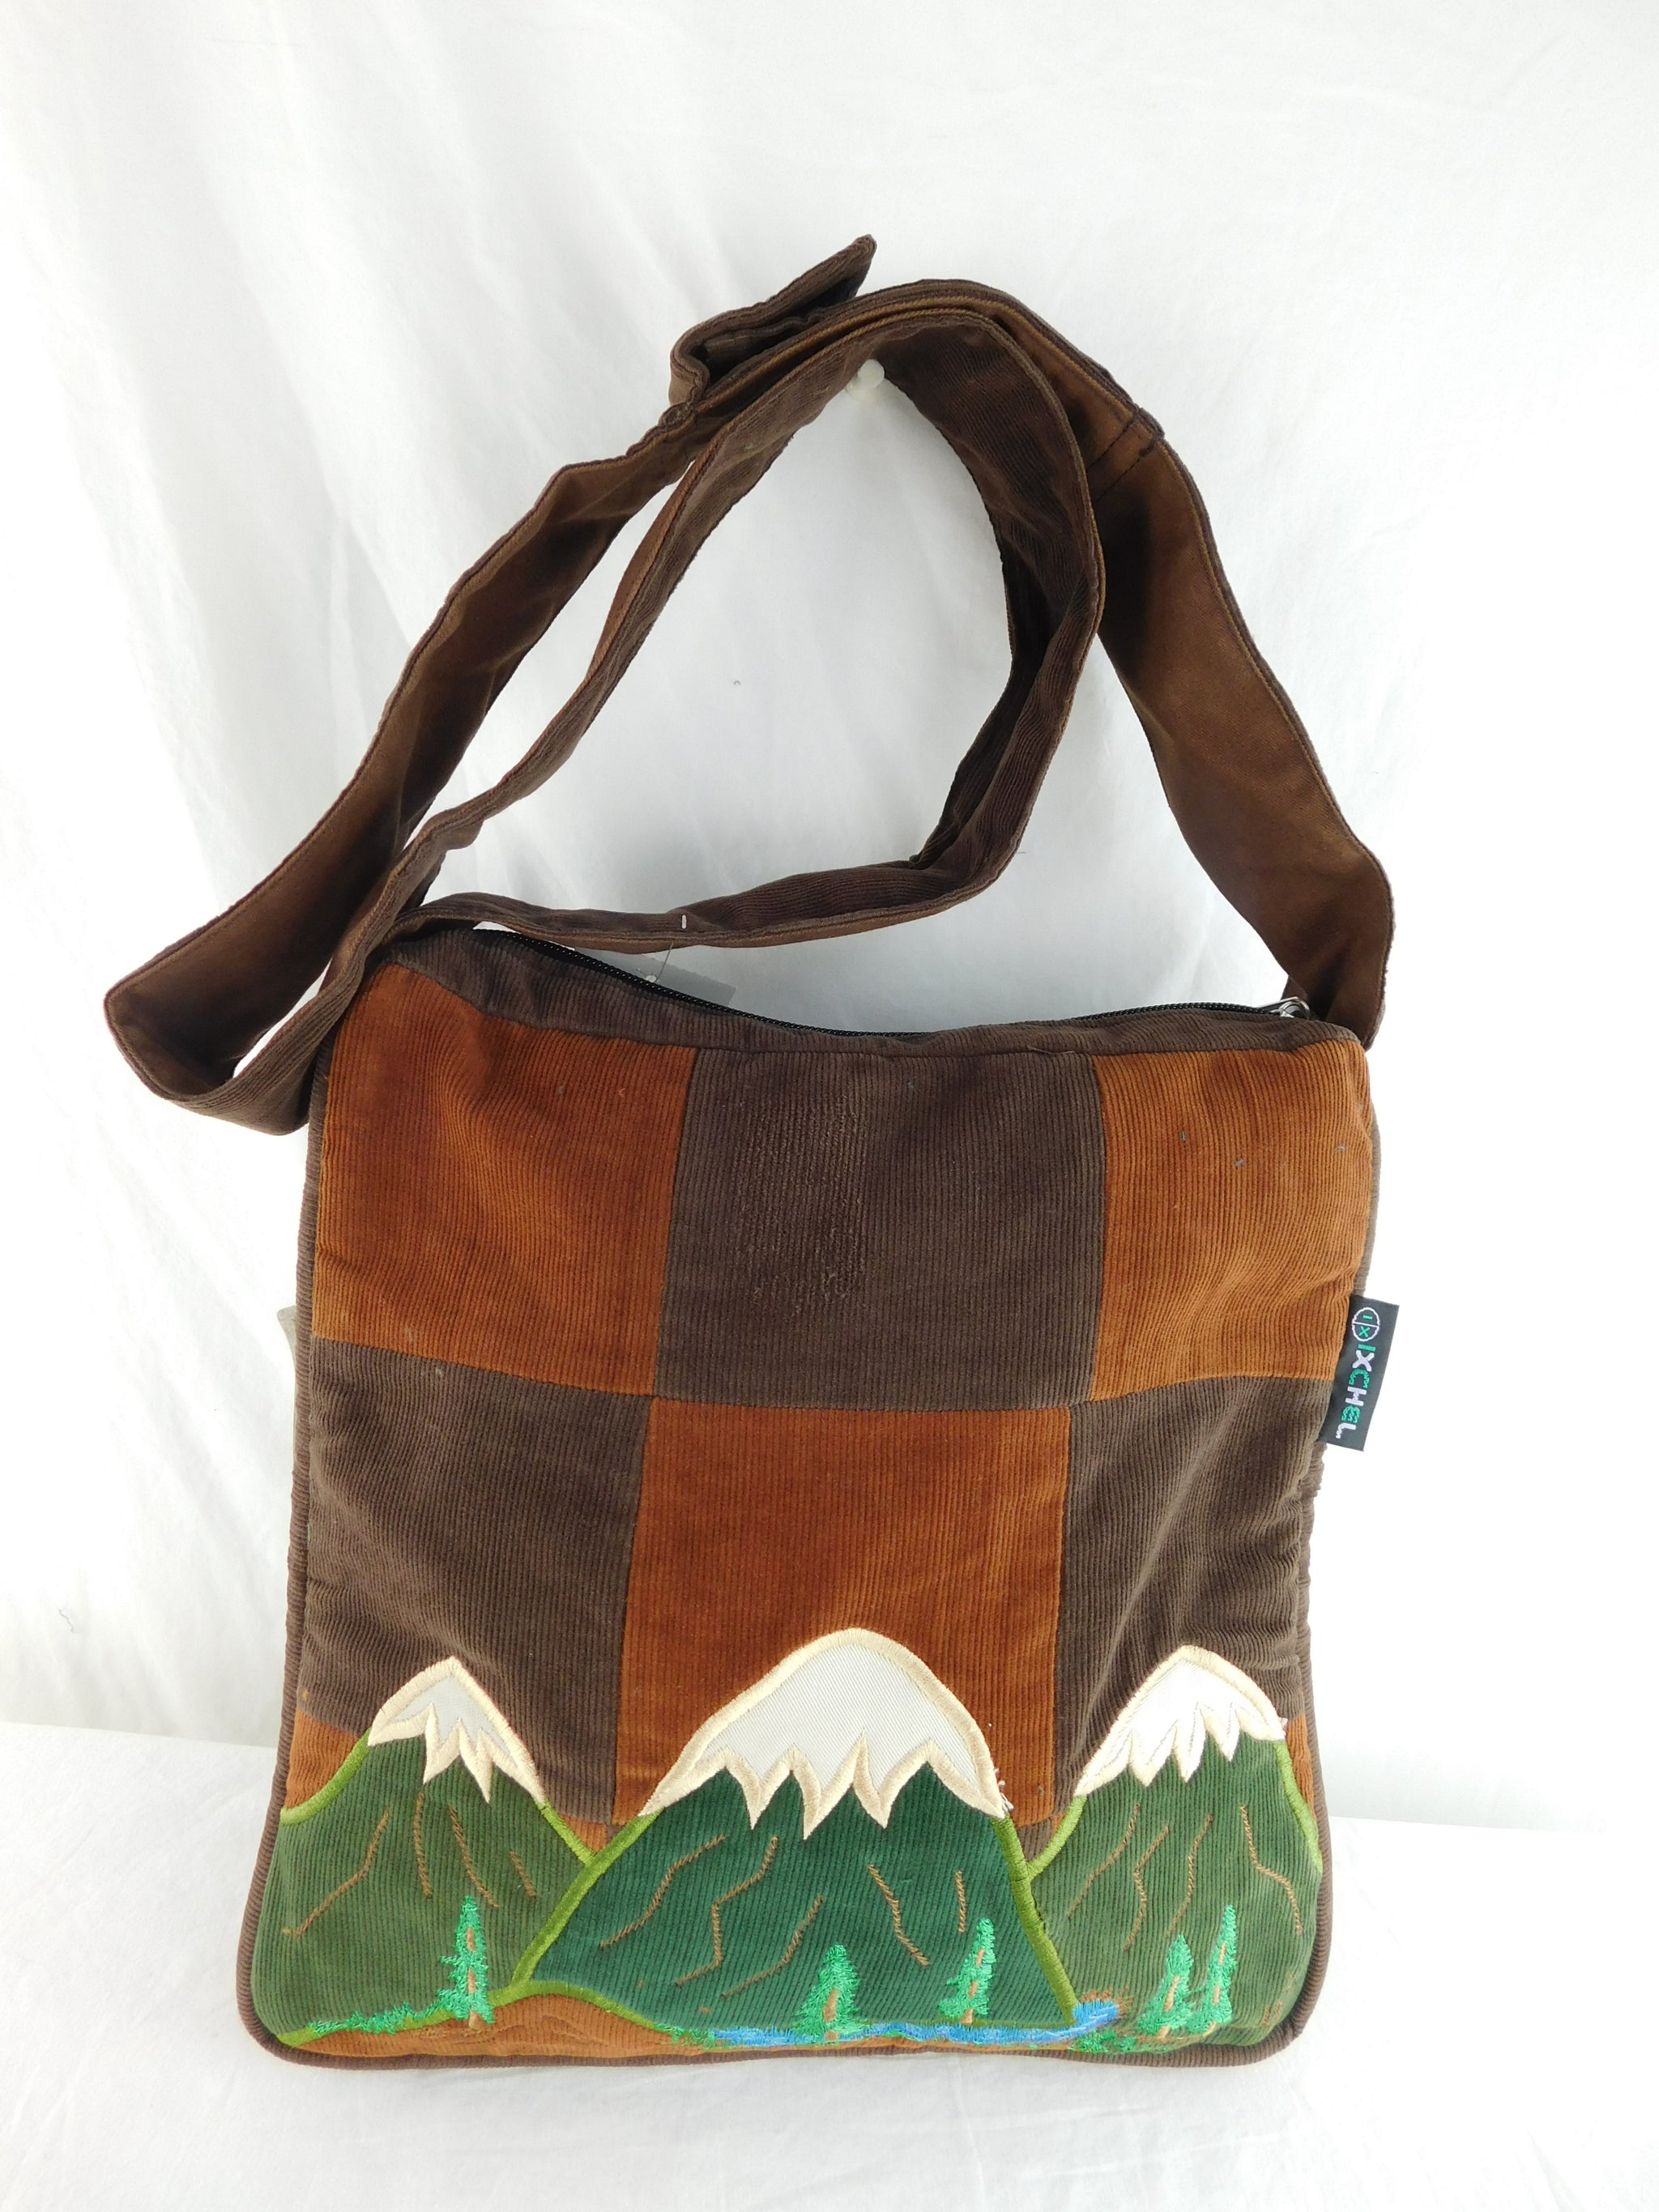 Patchwork shoulder bag with Mountain applique